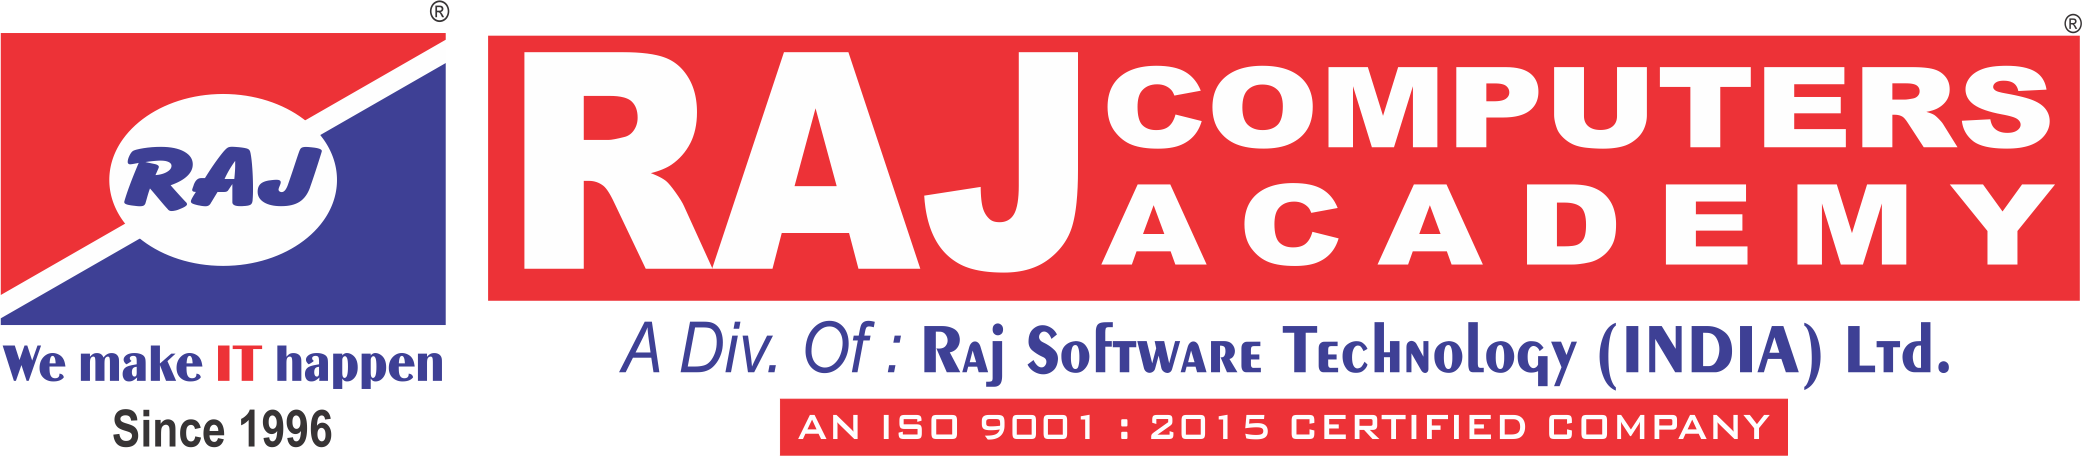 Raj Computers Academy